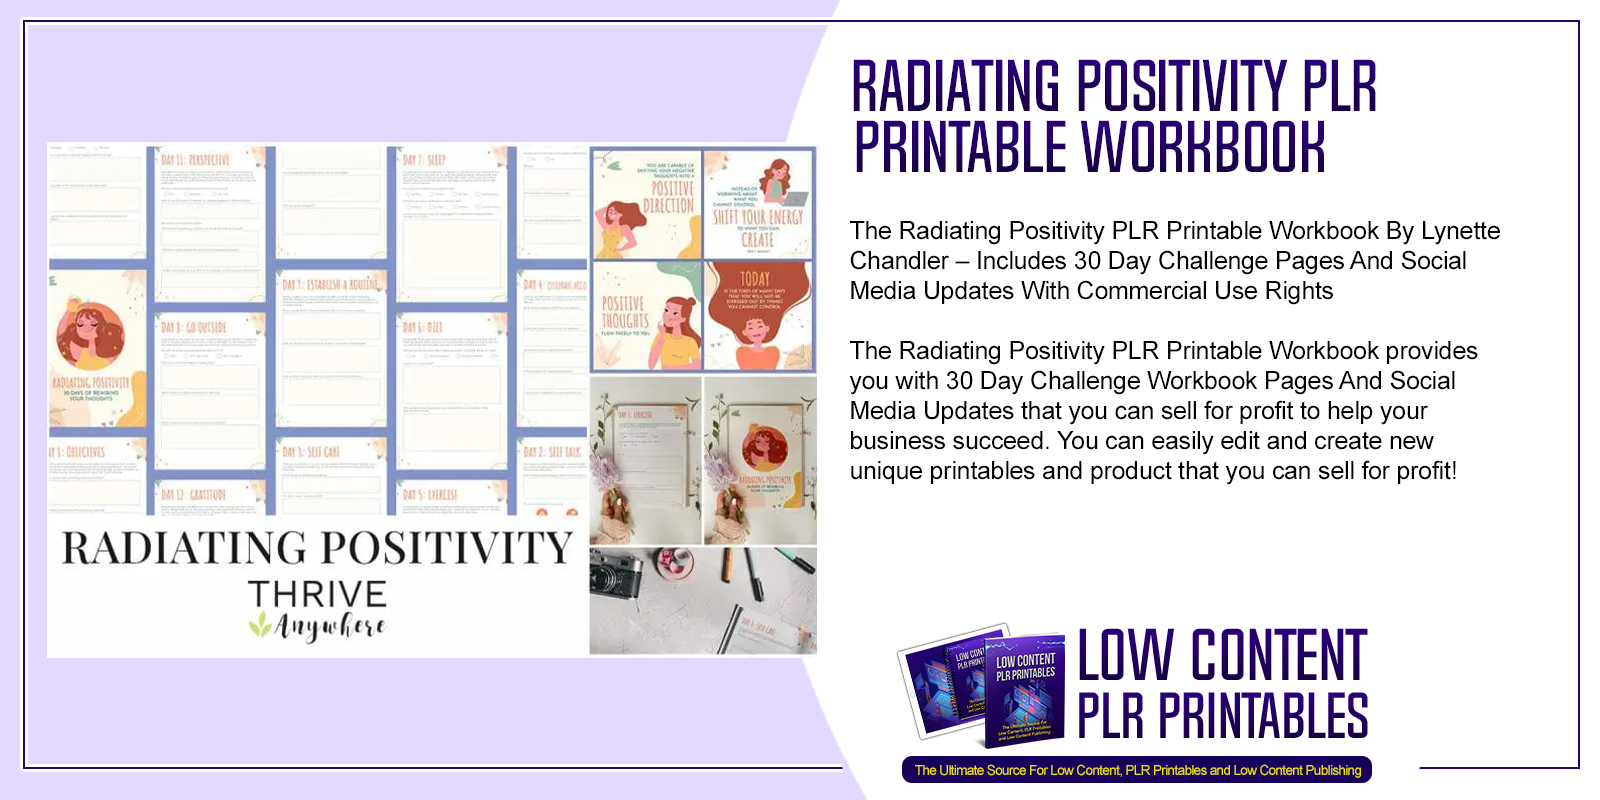 Radiating Positivity PLR Printable Workbook